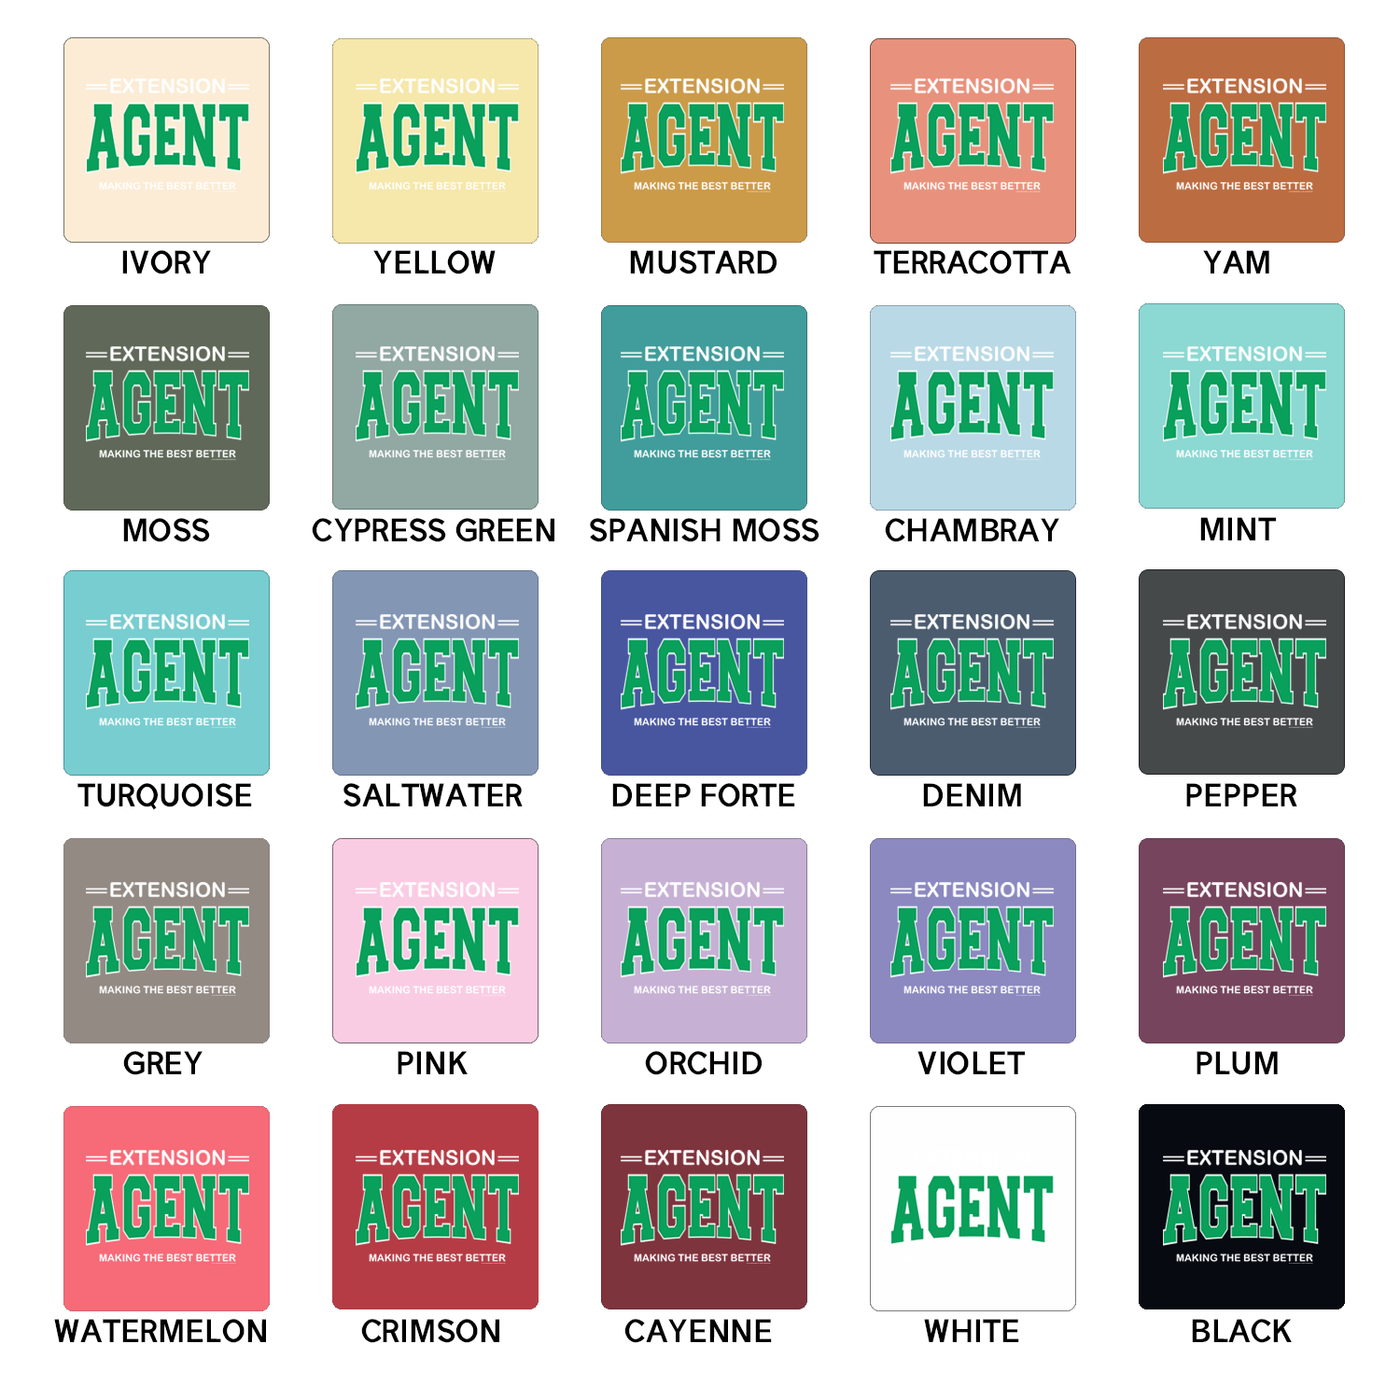 Extension Agent - Making The Best Better ComfortWash/ComfortColor T-Shirt (S-4XL) - Multiple Colors!